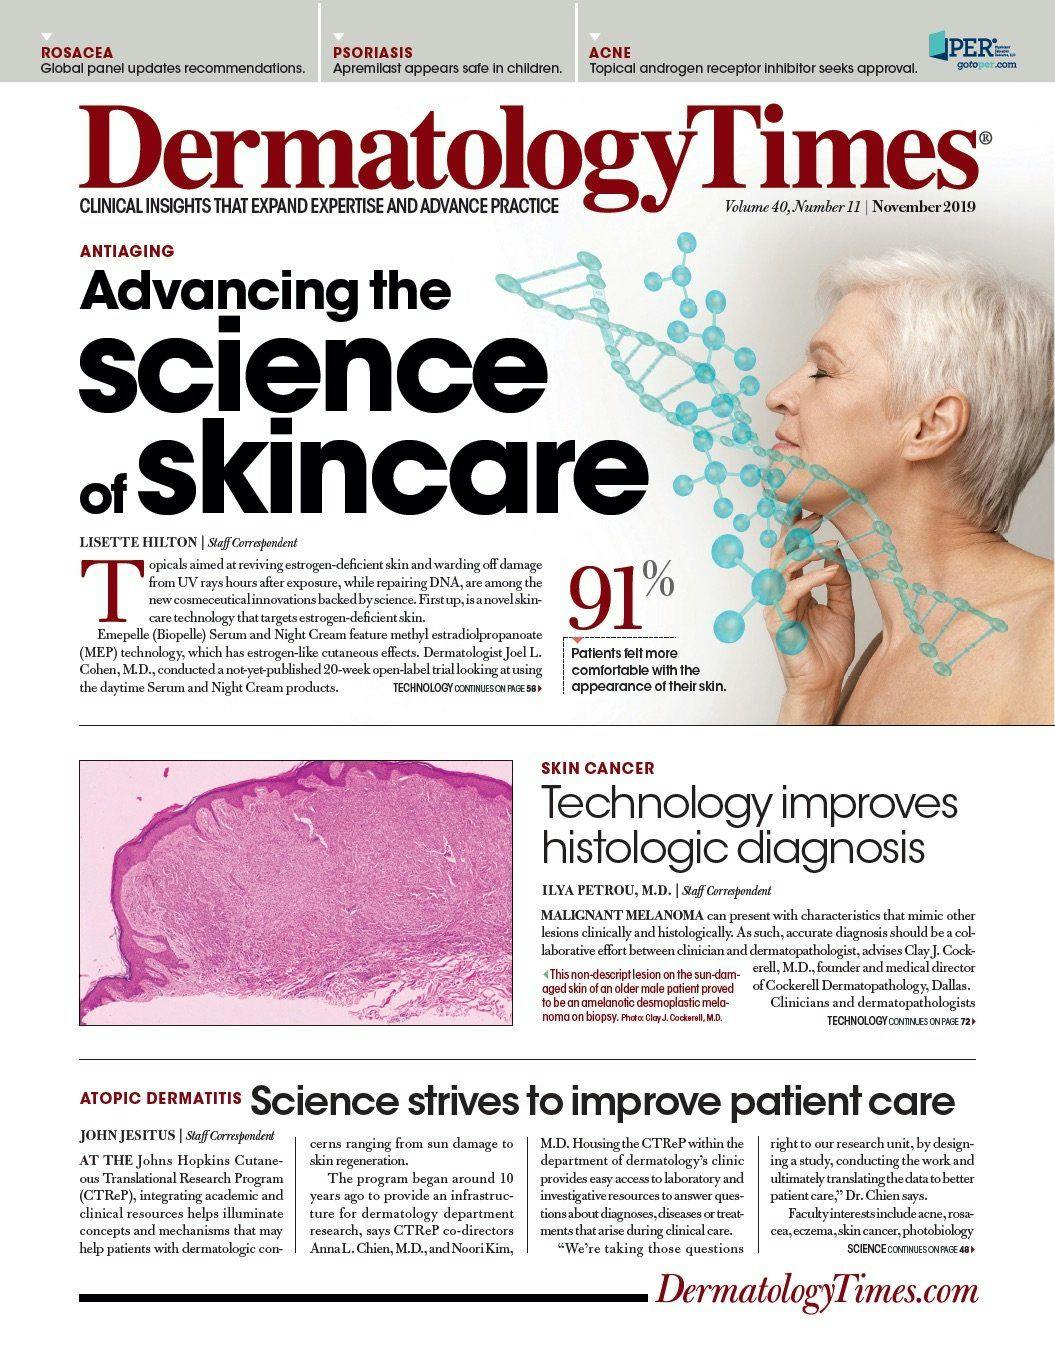 Dermatology Times, November 2019 (Vol. 40, No. 11)